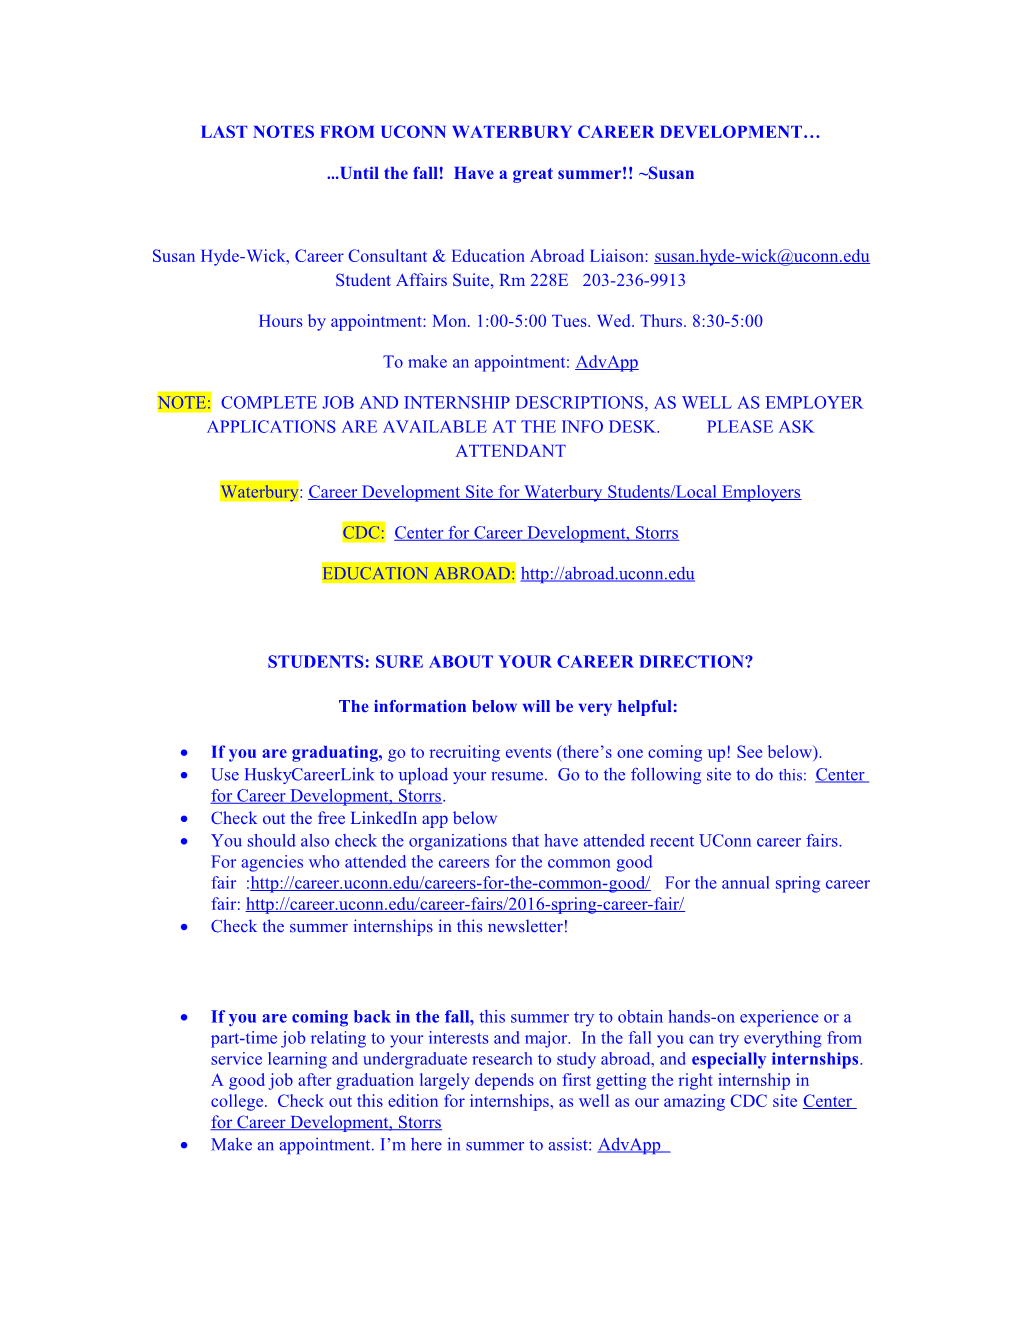 Last Notes from Uconn Waterbury Career Development